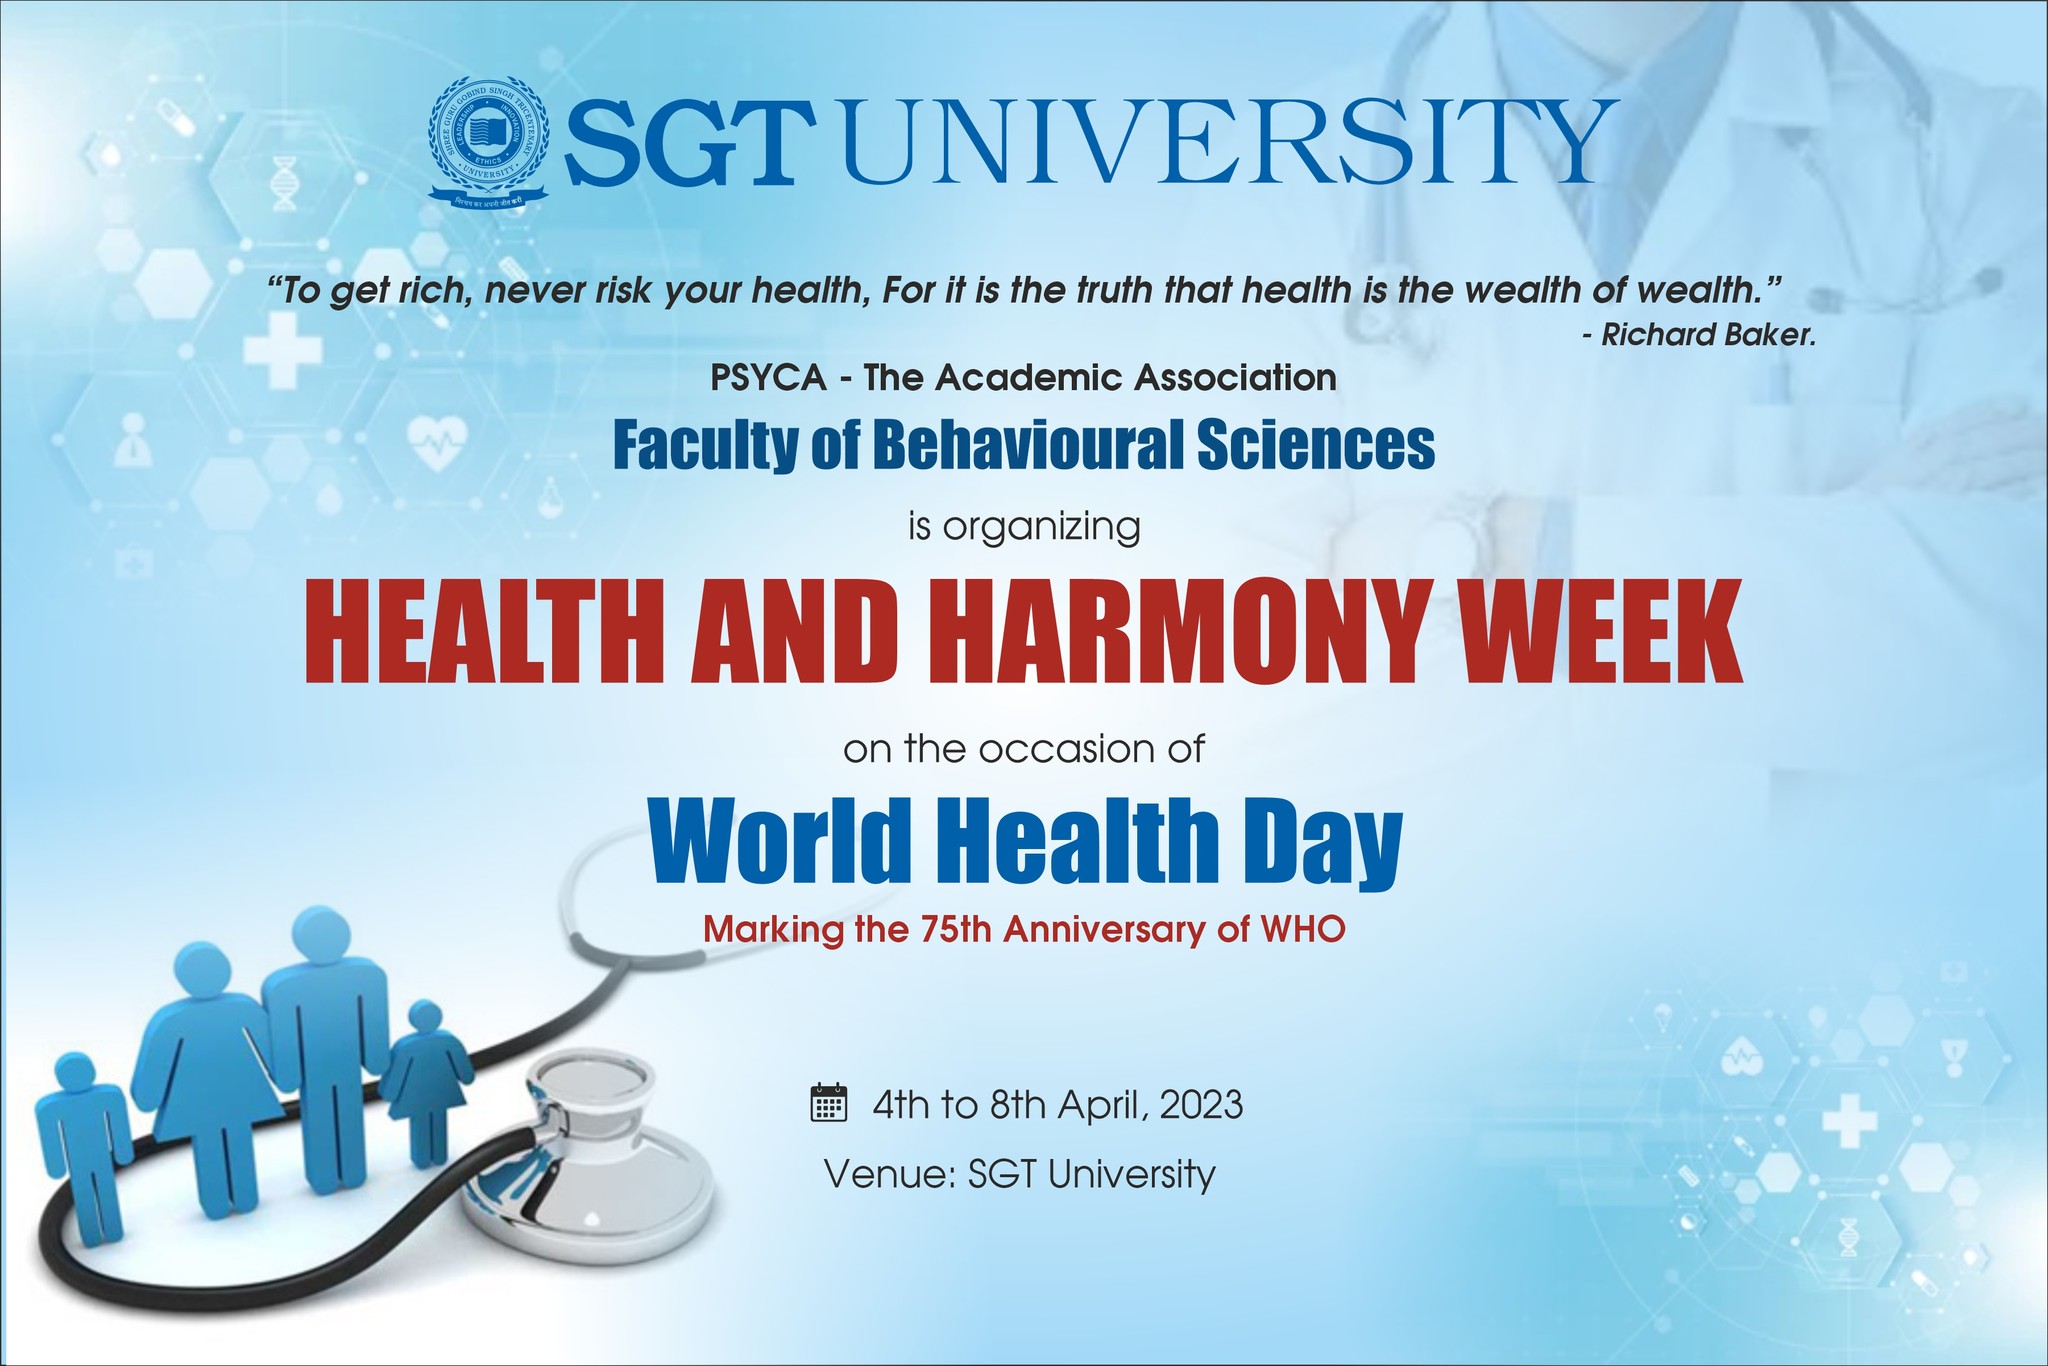 Health and Harmony Week